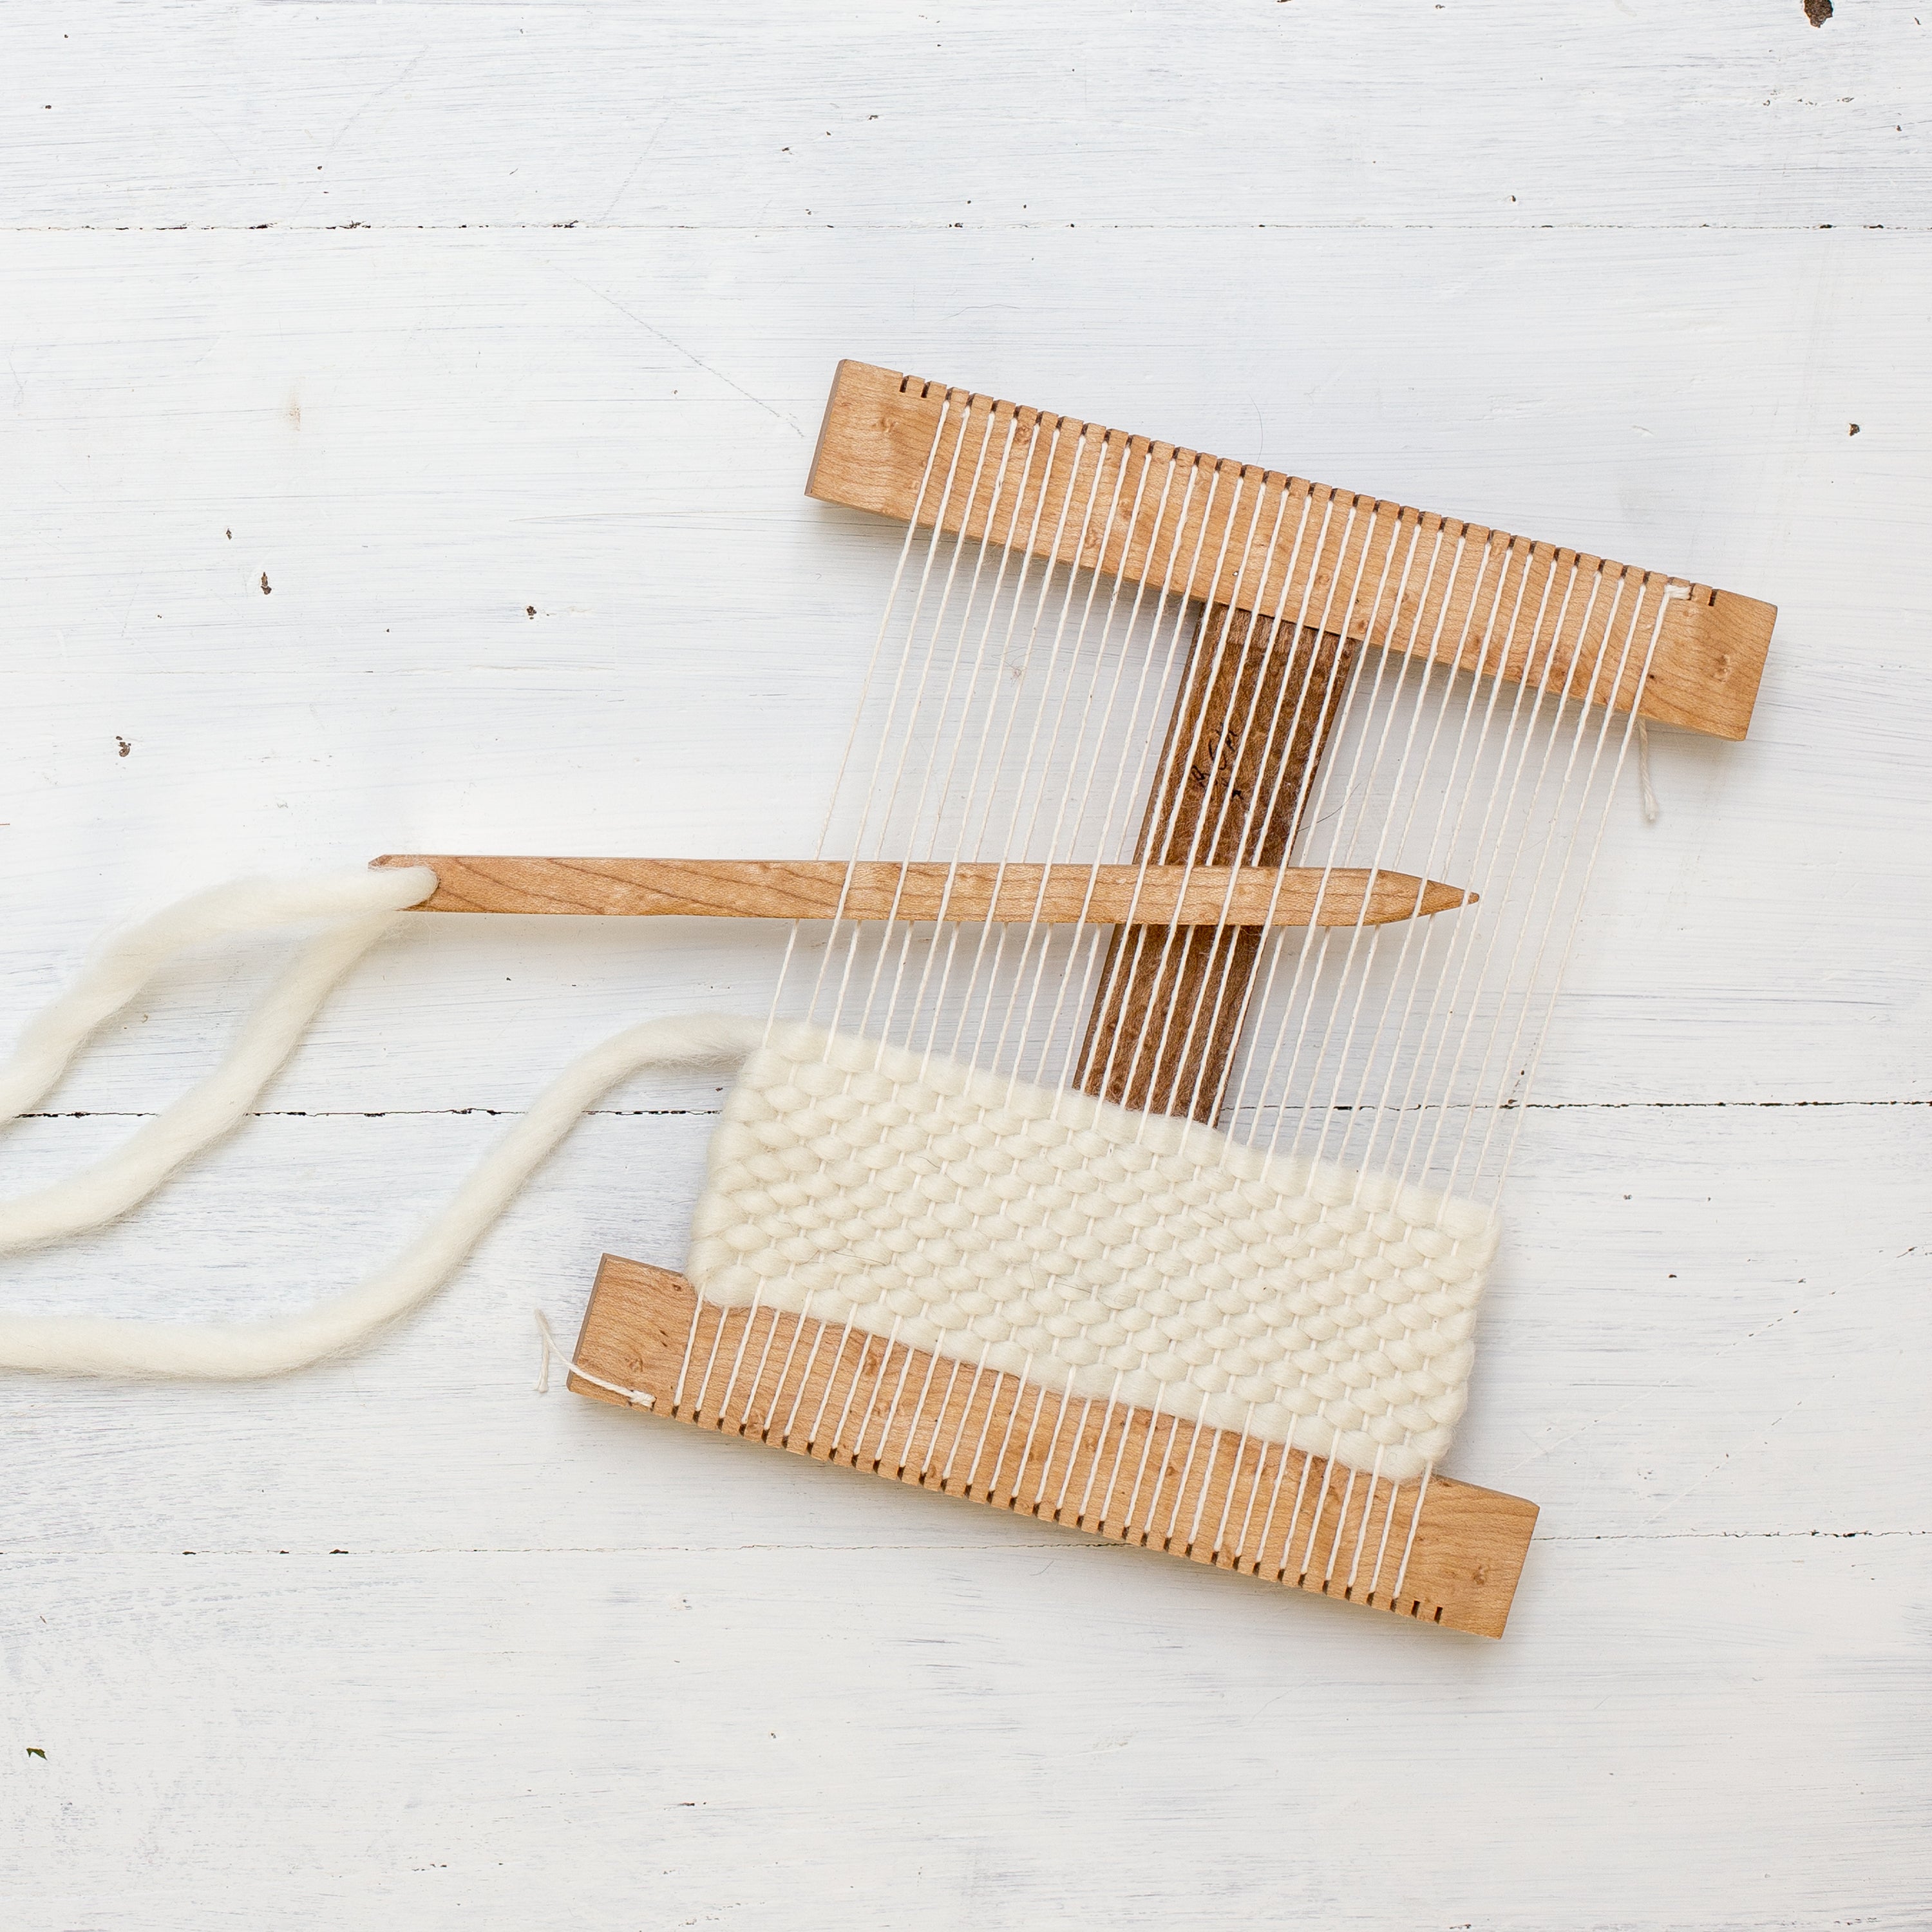 Flax & Twine Hand Loom Kit